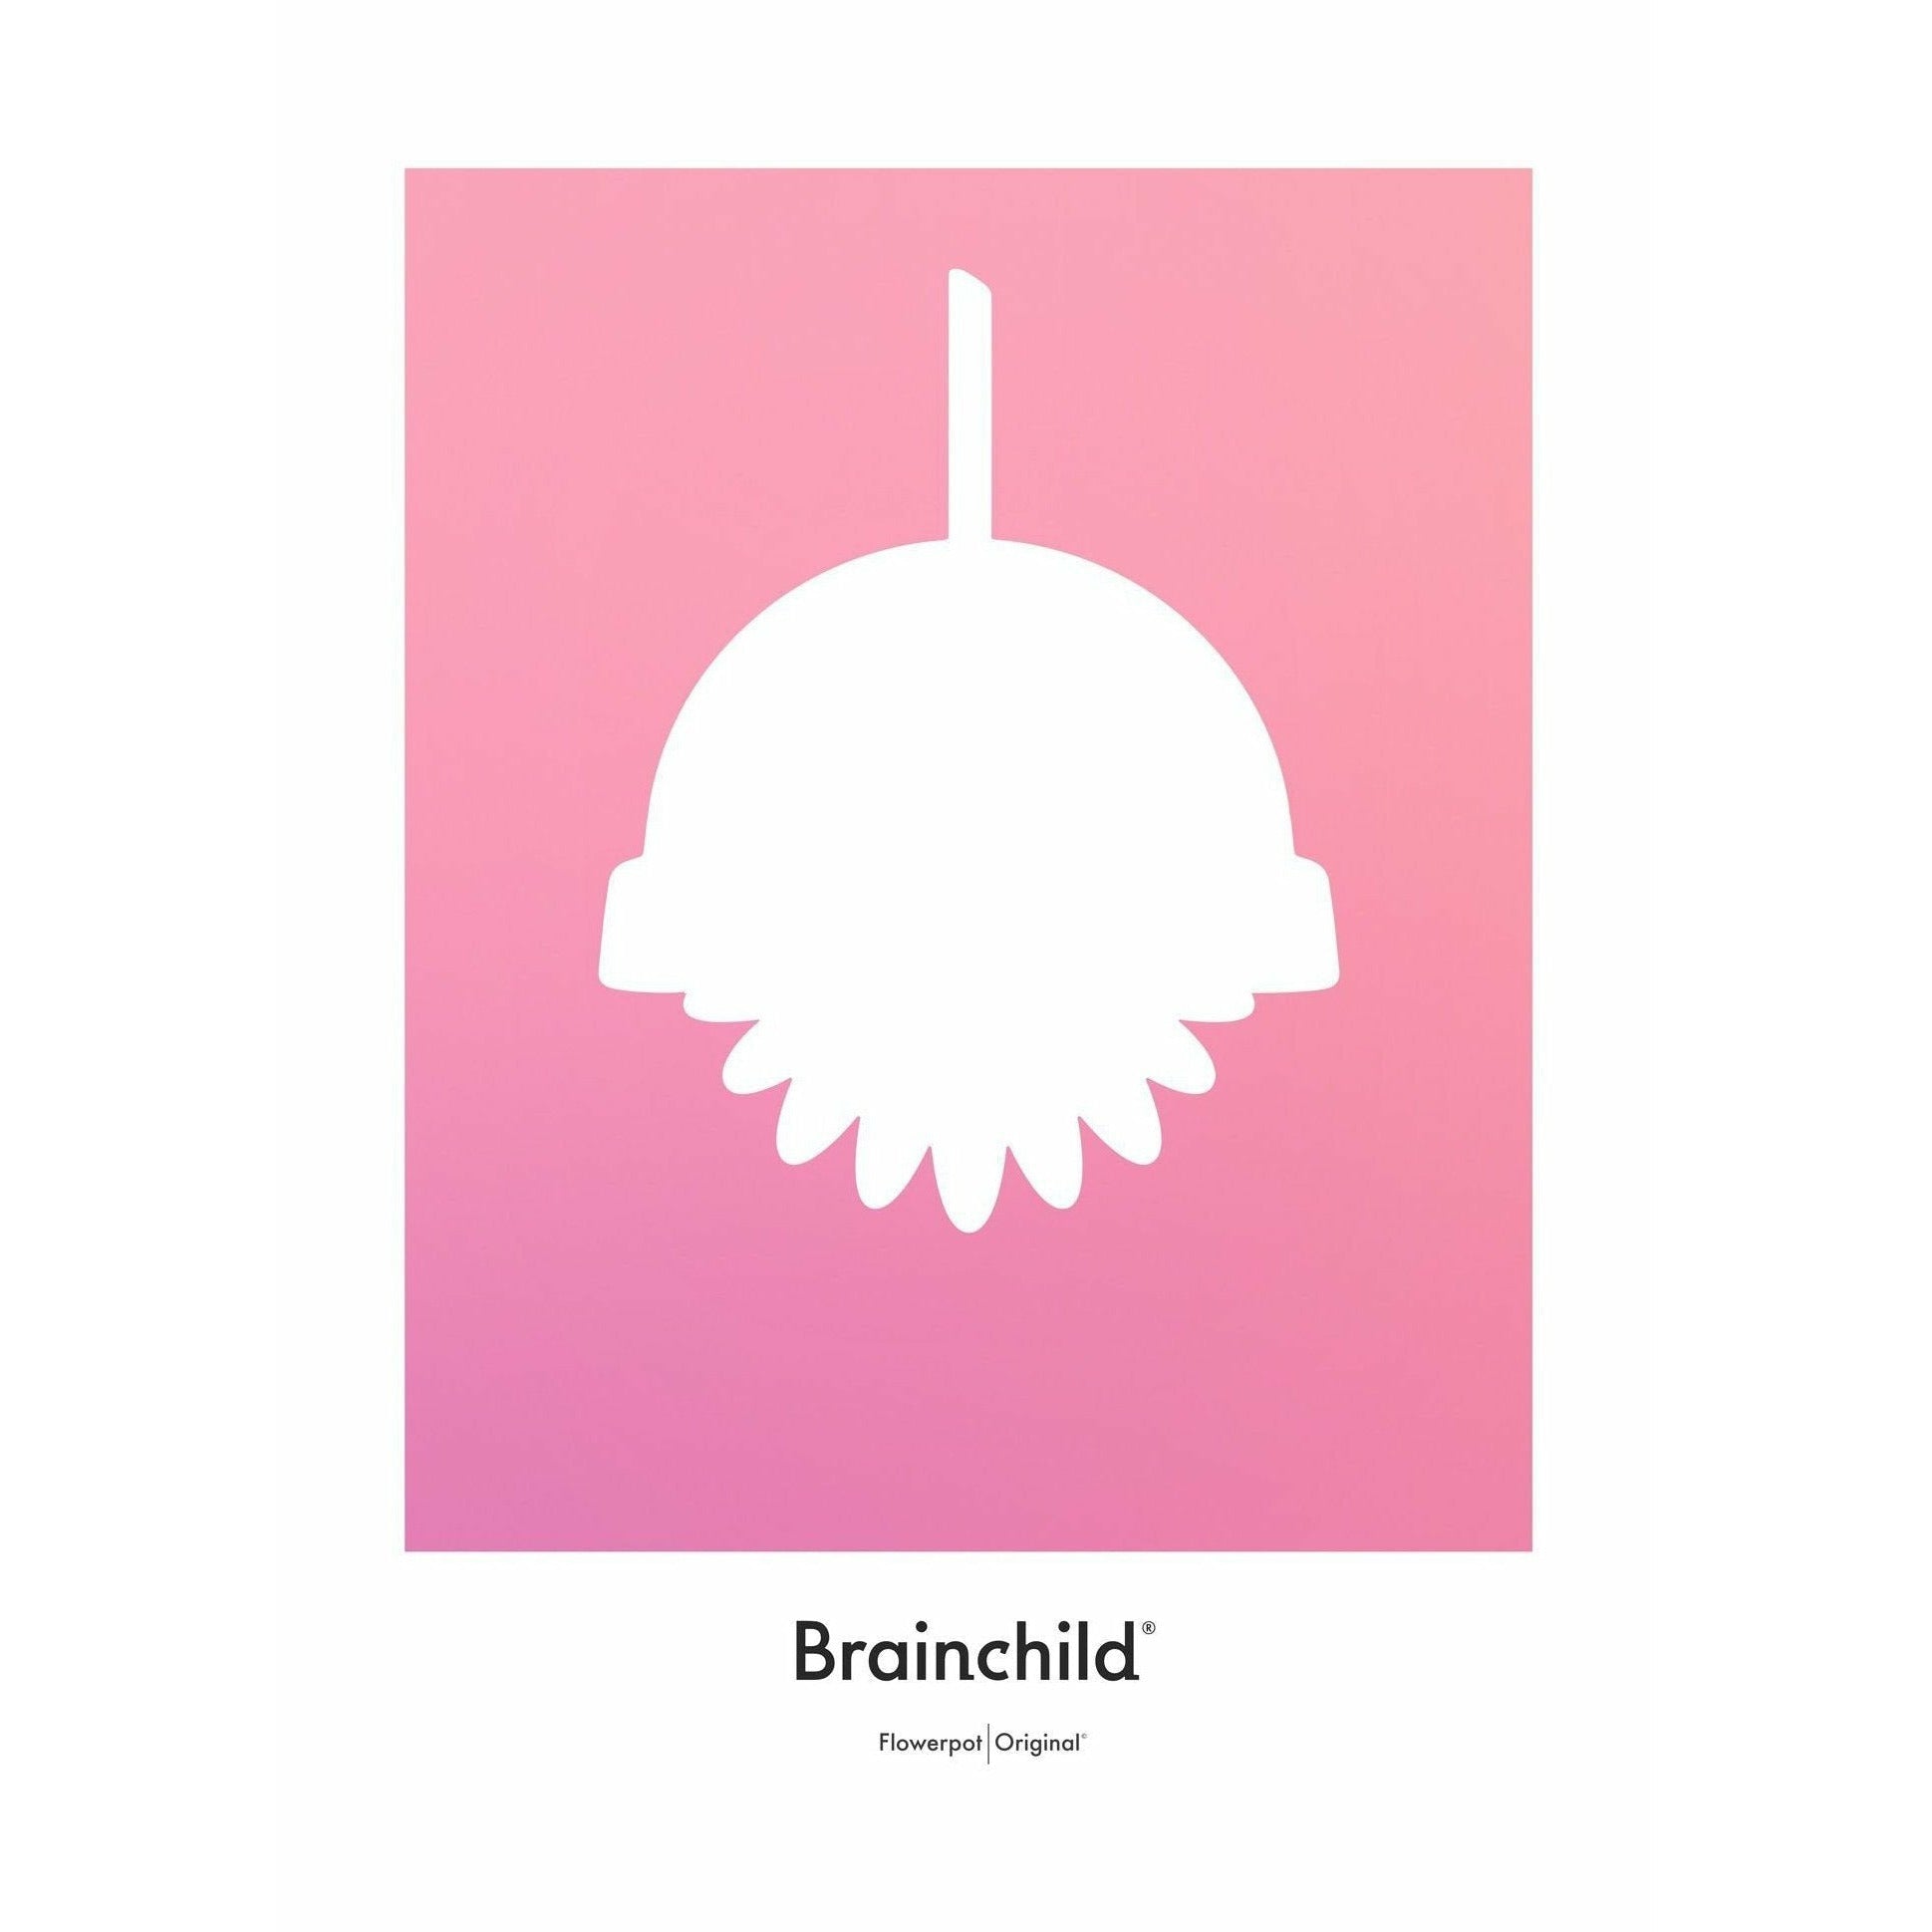 Brainchild Flowerpot Design Icon Poster Without Frame 70 X100 Cm, Pink